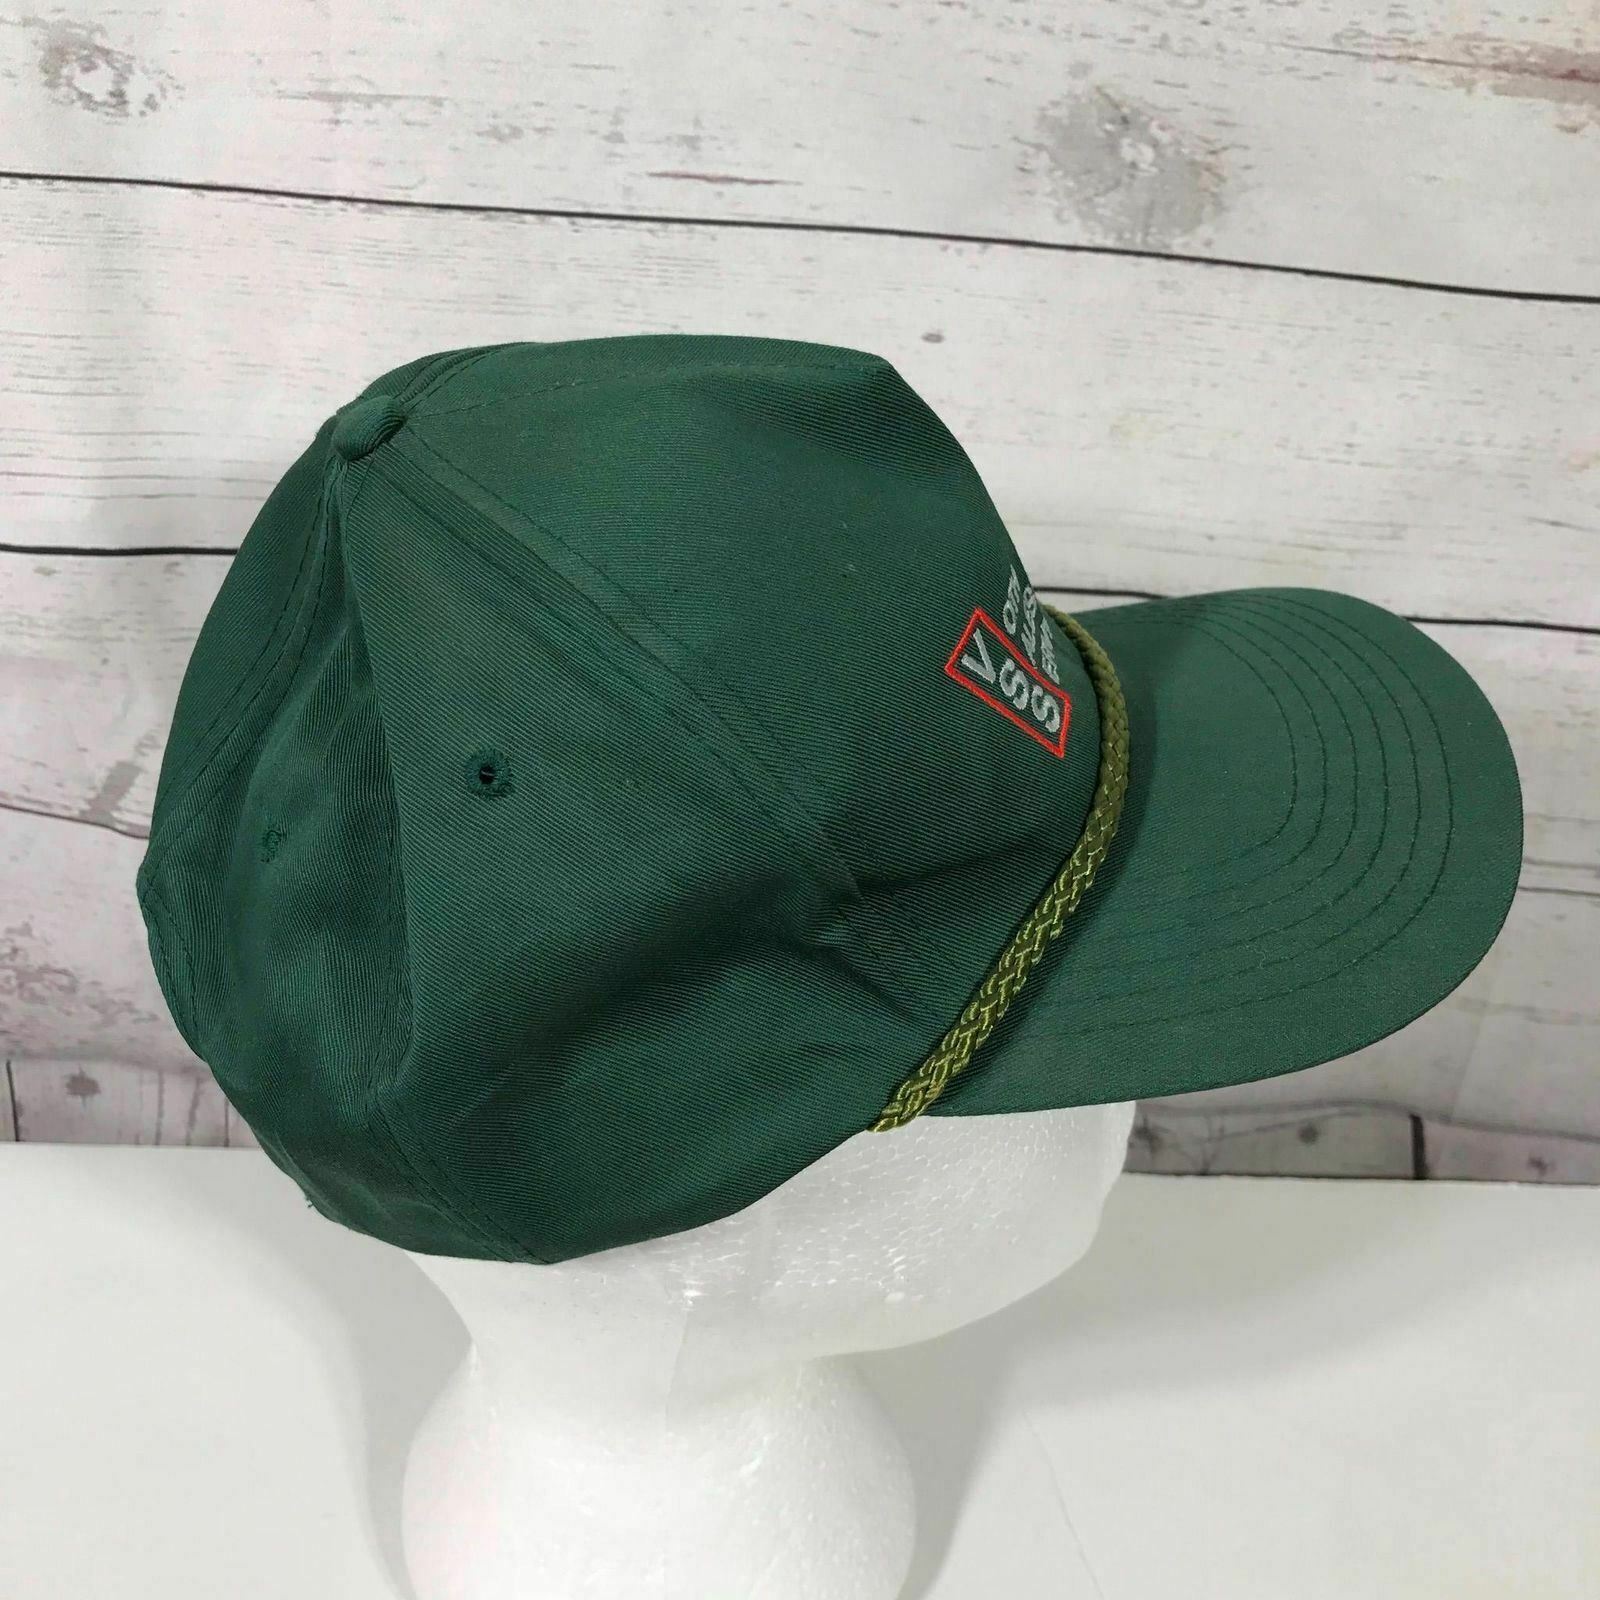 Mack Trucks Hat Dark Green Snap Back Baseball Cap - Hats